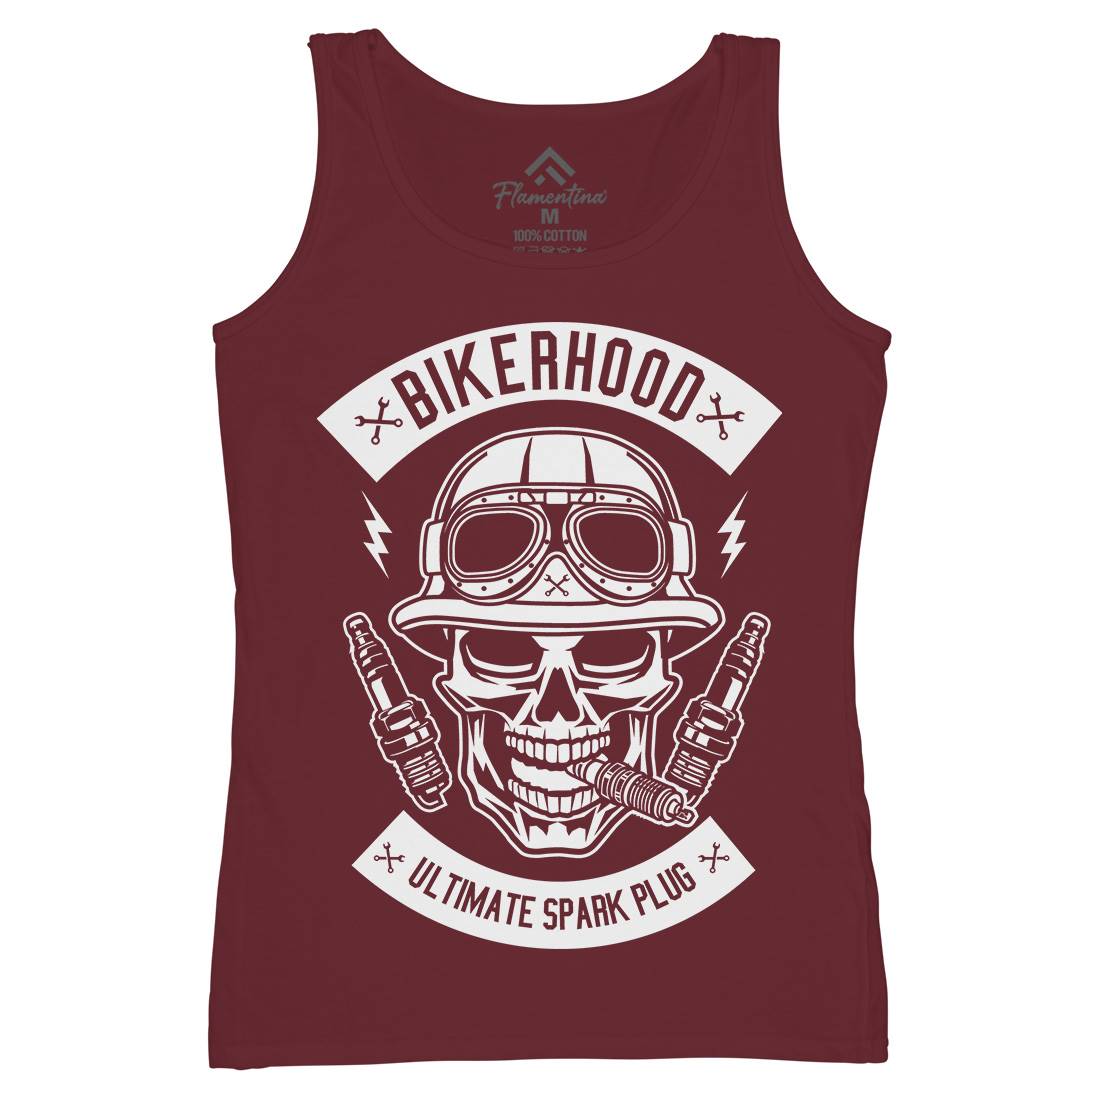 Bikerhood Womens Organic Tank Top Vest Bikes B497